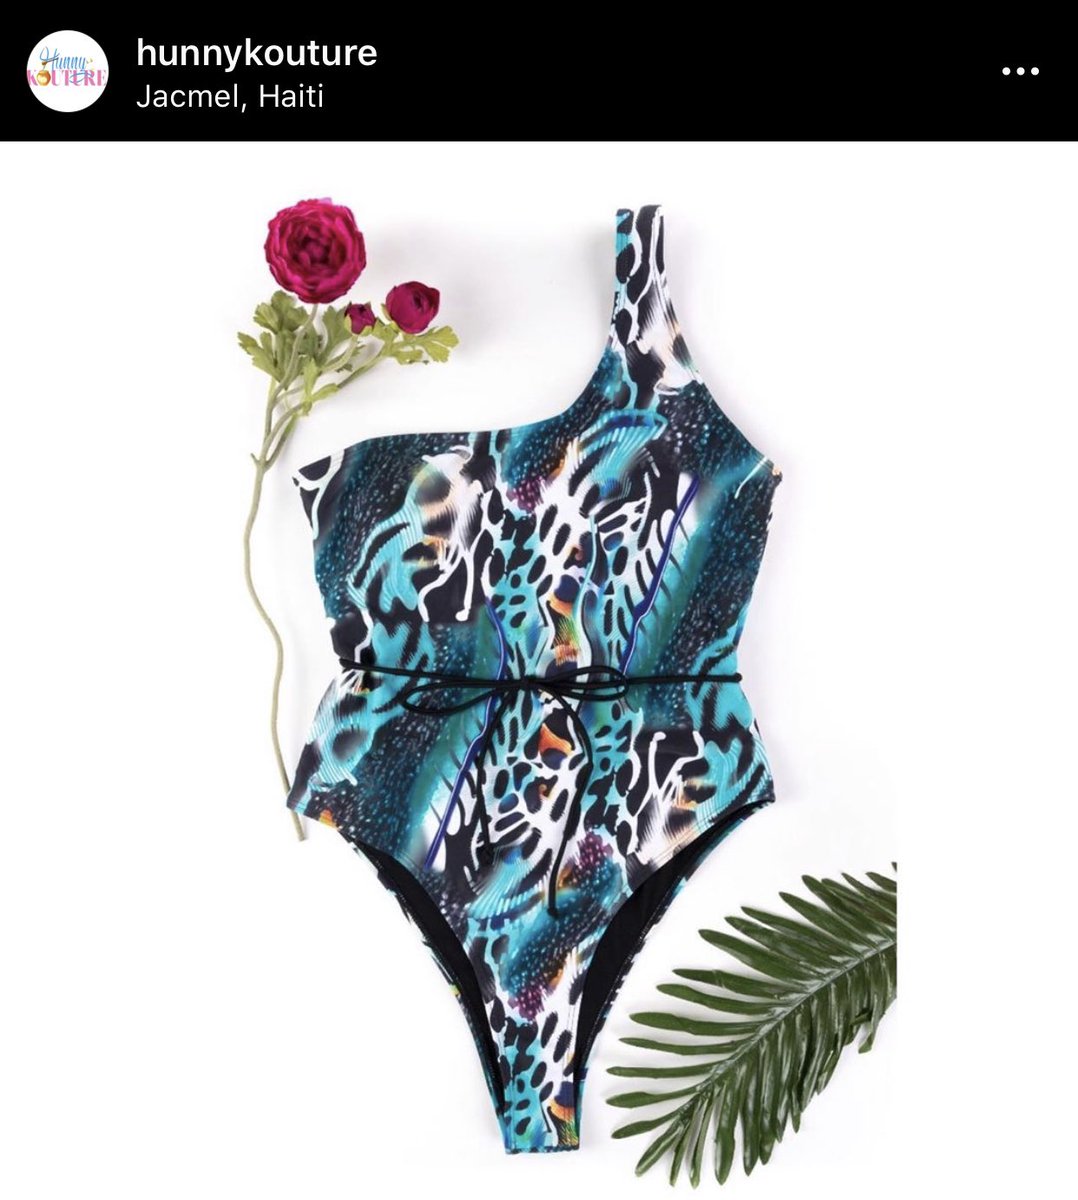 Blue Safari One Piece 👙
Shop: @hunnykouture
Follow us on IG & FB: @hunnykouture 👙🍯 #swimwear #swimsuitseason #summertimefine #bold #bright #colorfulswimwear  #swimwear #HunnyKouture #bikinijunkie #musthave #summerishere #bikinifitness #summerfashion